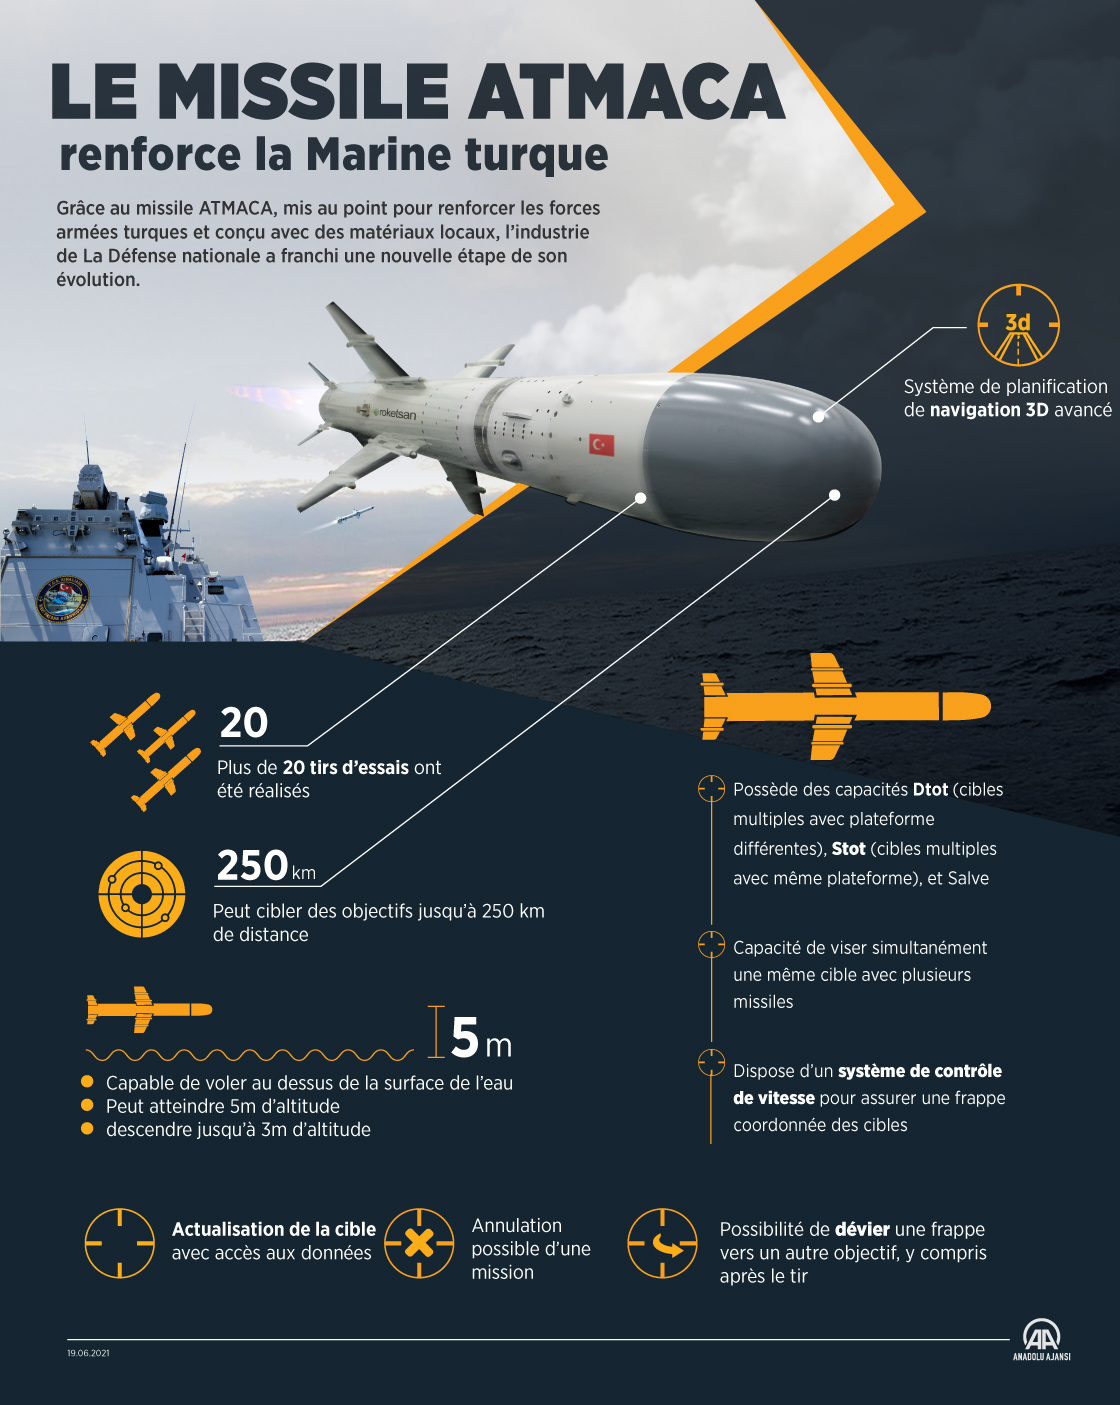 Le missile ATMACA  renforce la Marine turque 